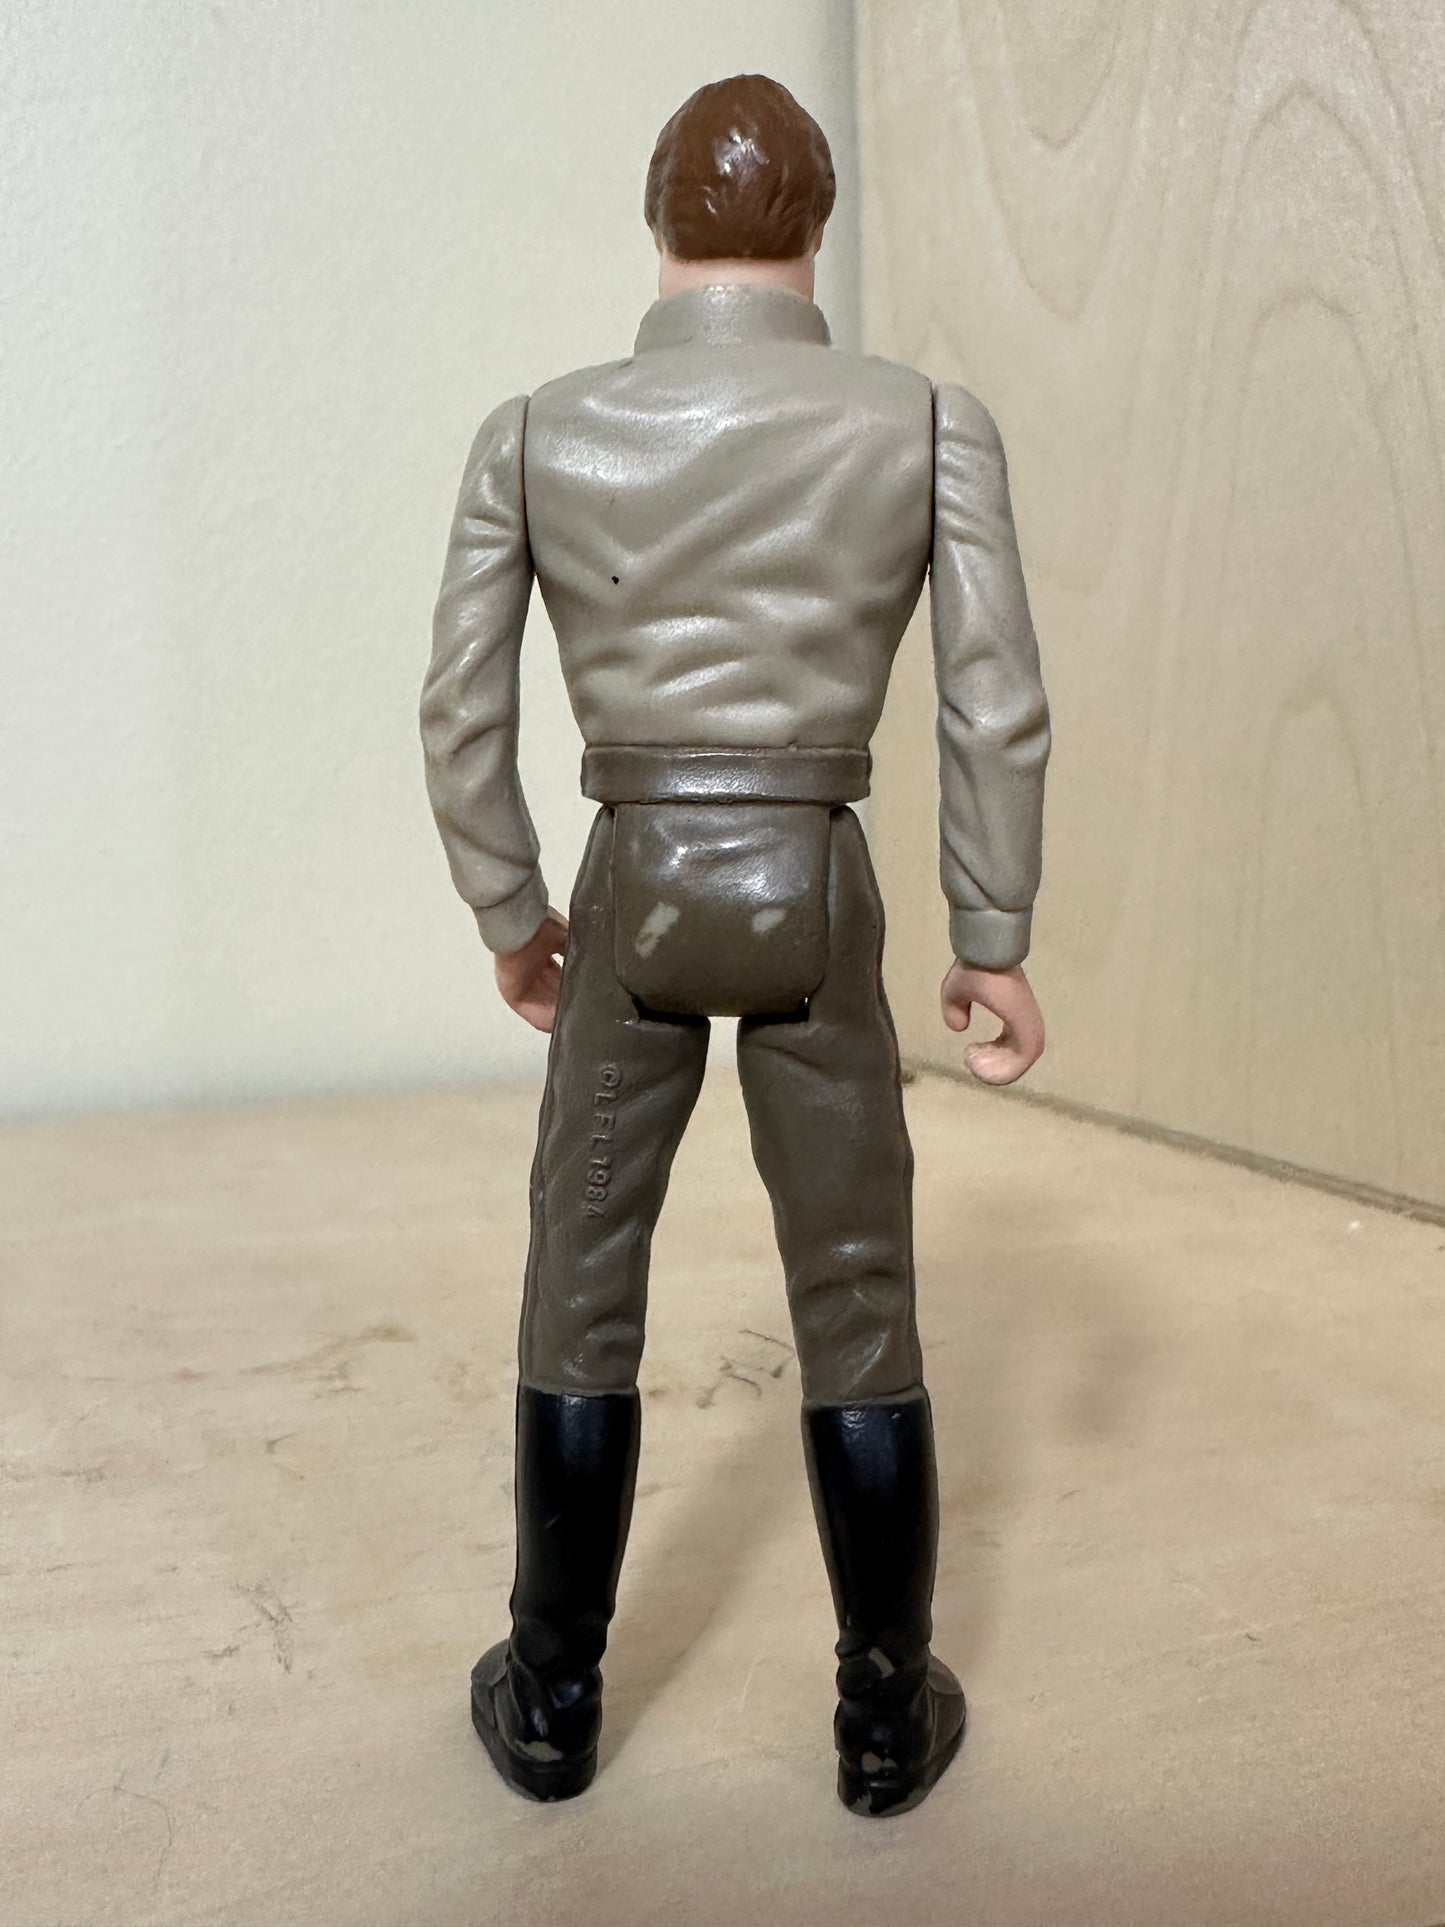 1985 Kenner Star Wars Last 17 Carbonite Han Solo Incomplete Vintage Action Figure Toy